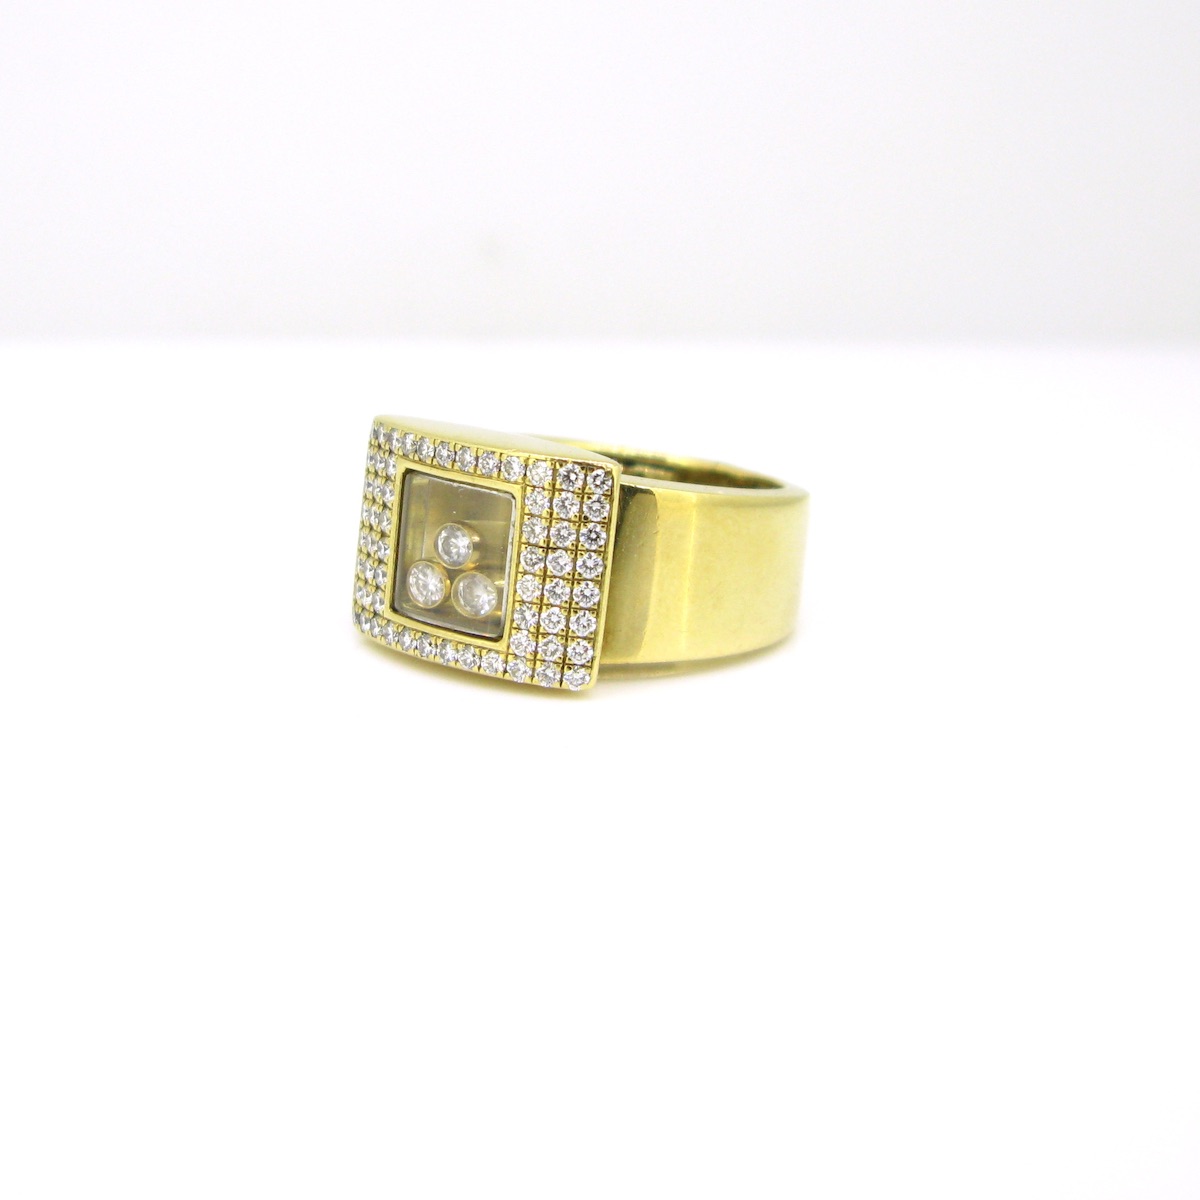 Gifford Ring. Circa 1970, Vintage - Estate Diamond Jewelry